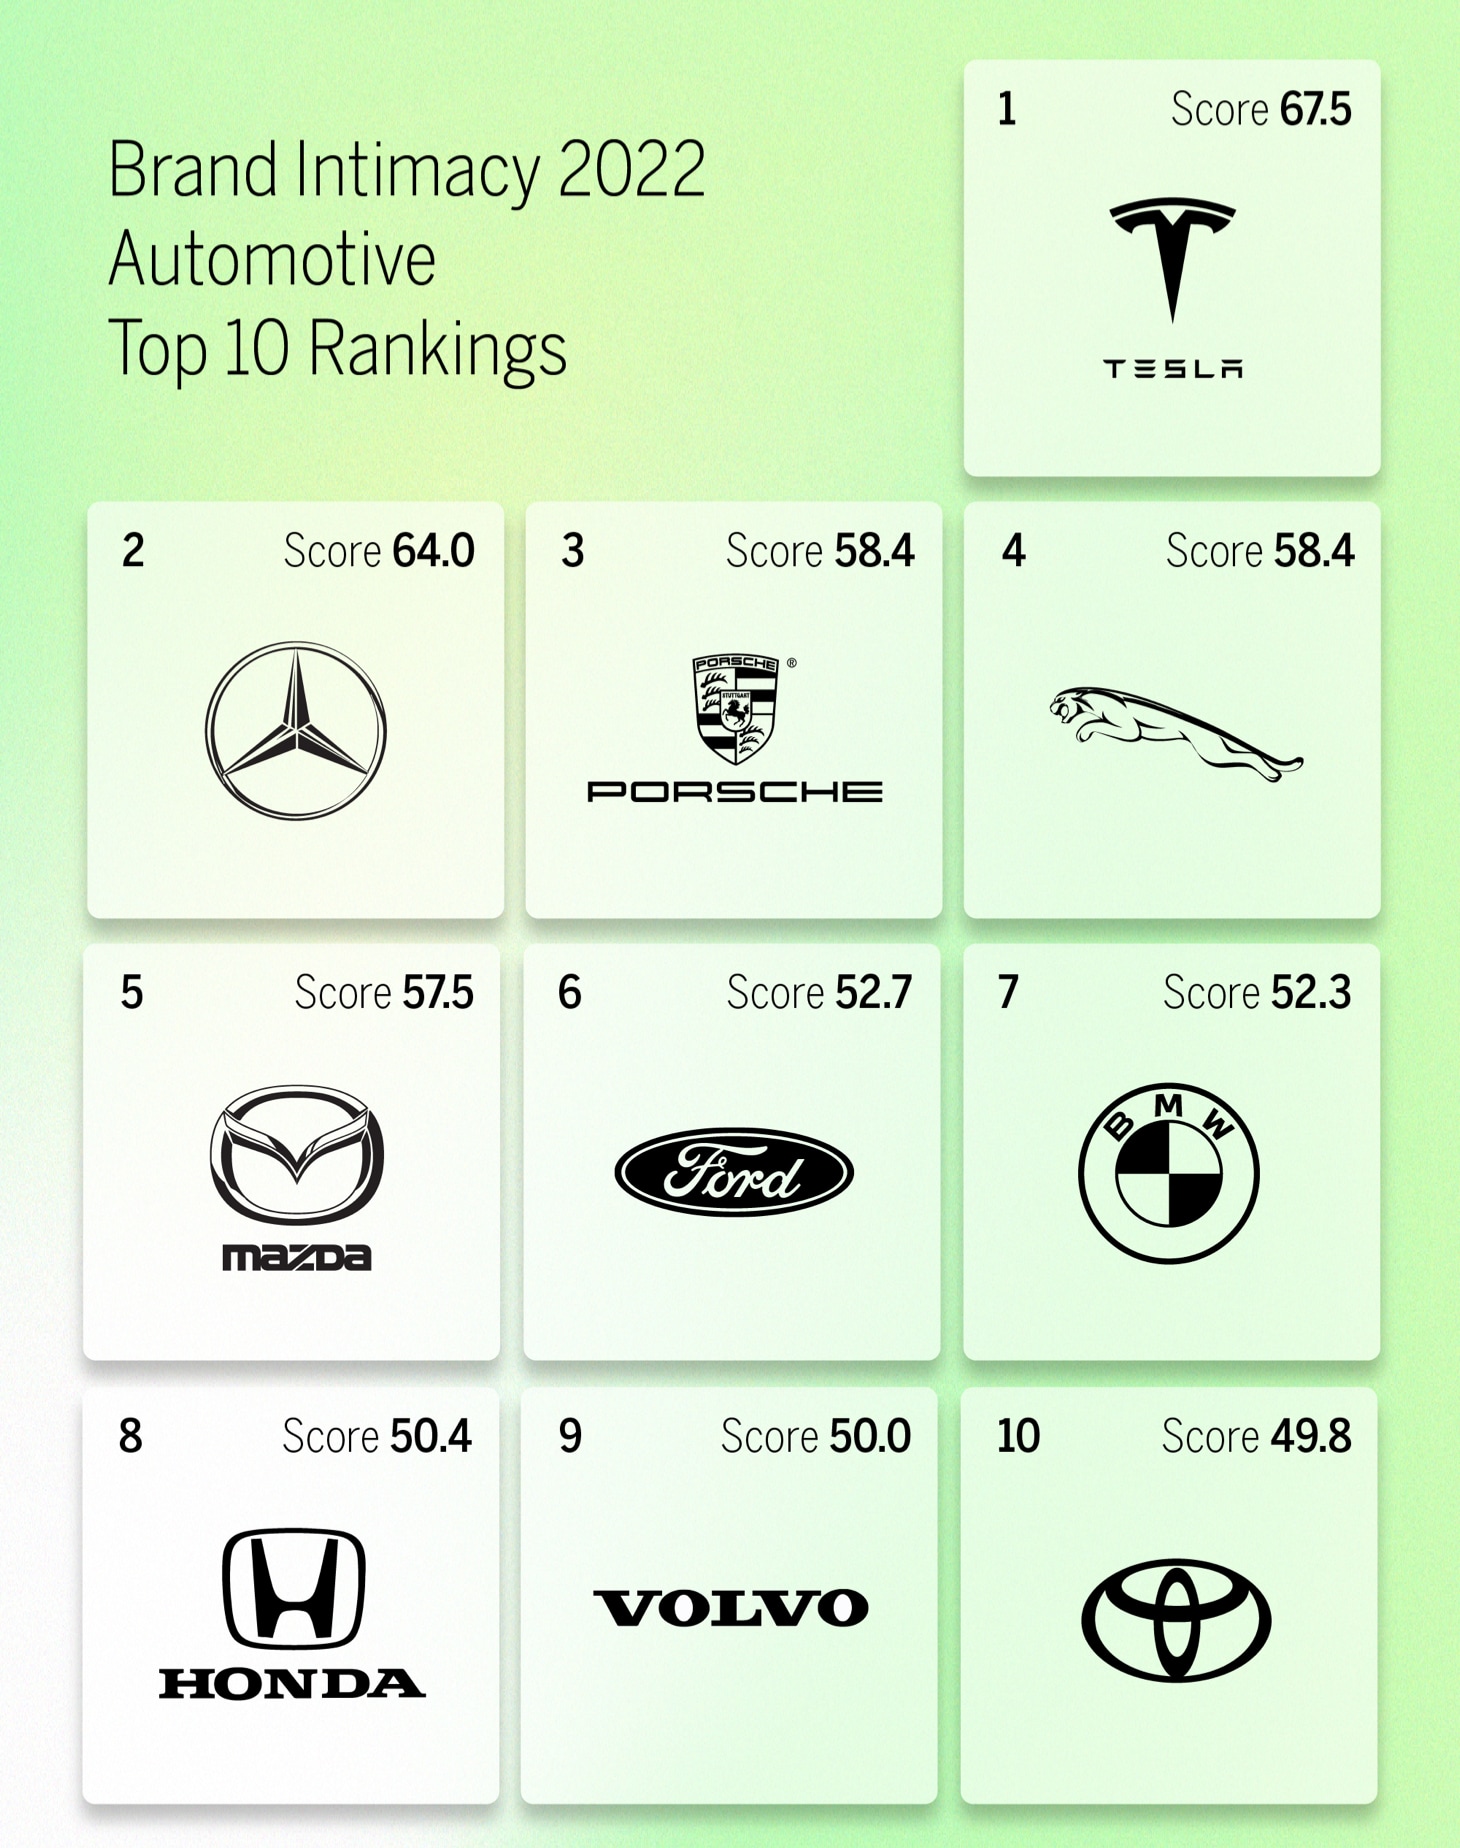 Brand intimacy 2021 top 10 automotive rankings.